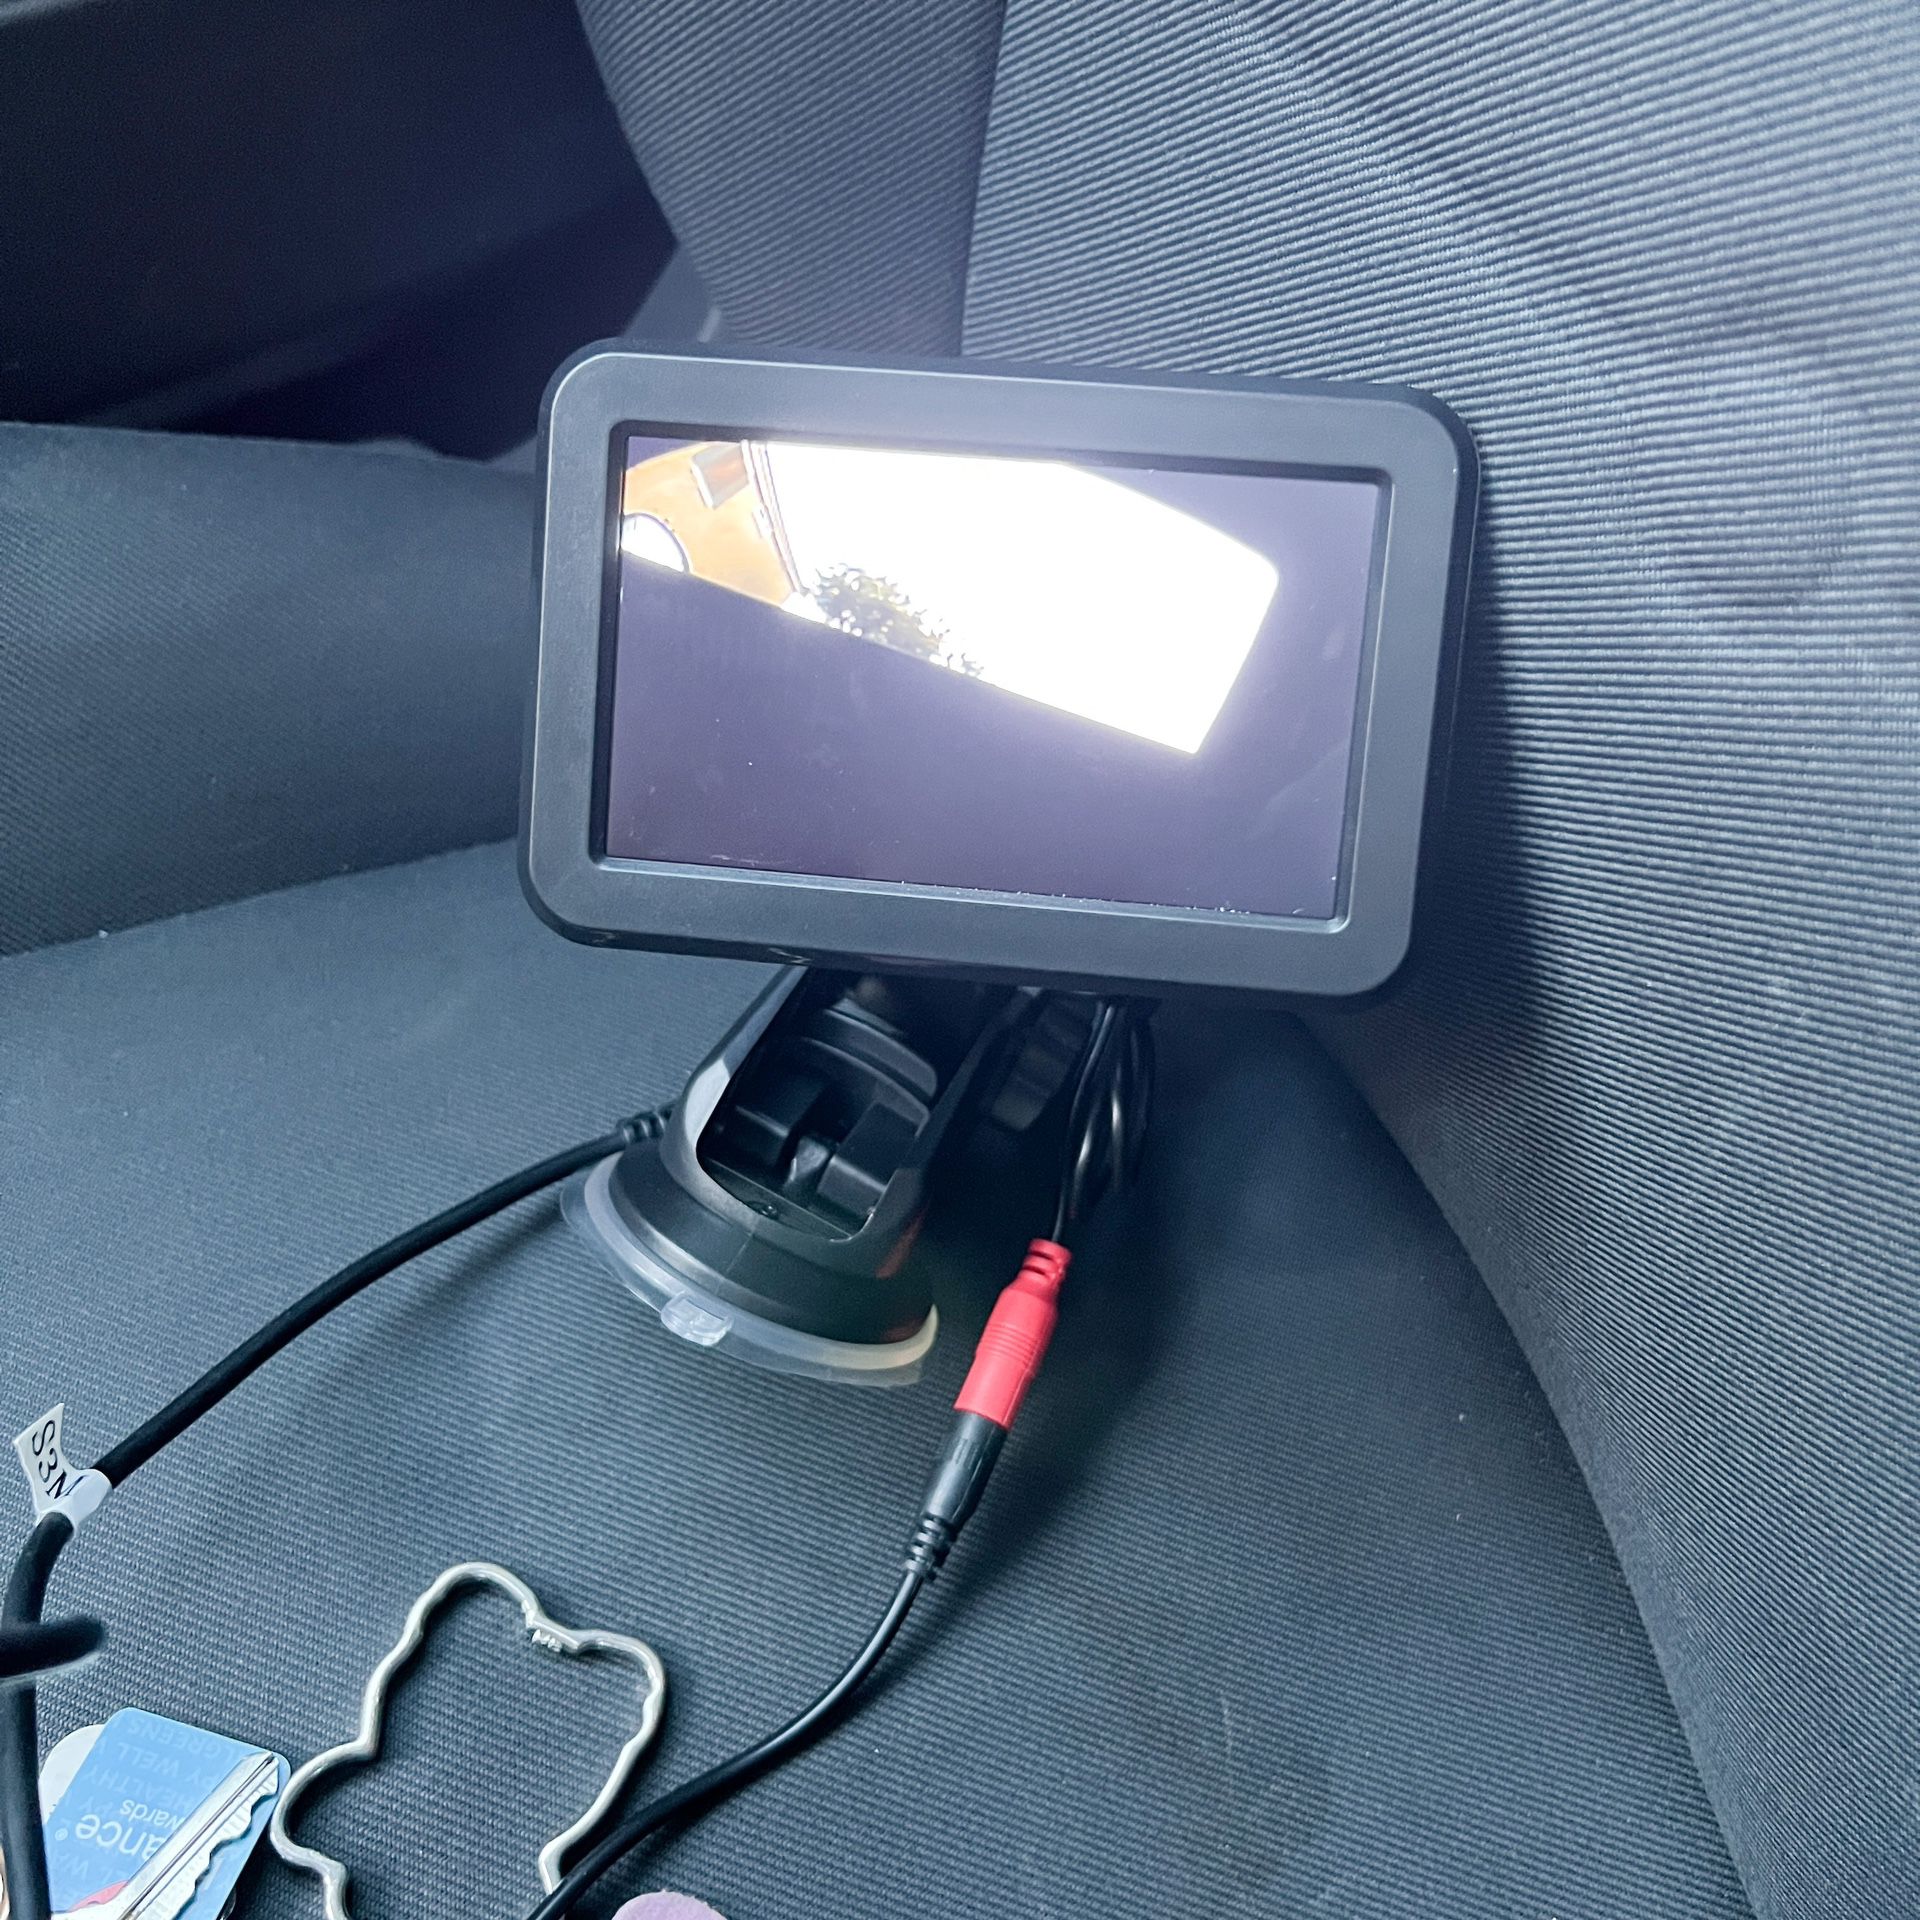 Reverse Camera,Car Rear View Blind Spot Image Display Screen Wireless Infrared Camera HD Night View For Trucks RVs,Reversing Display